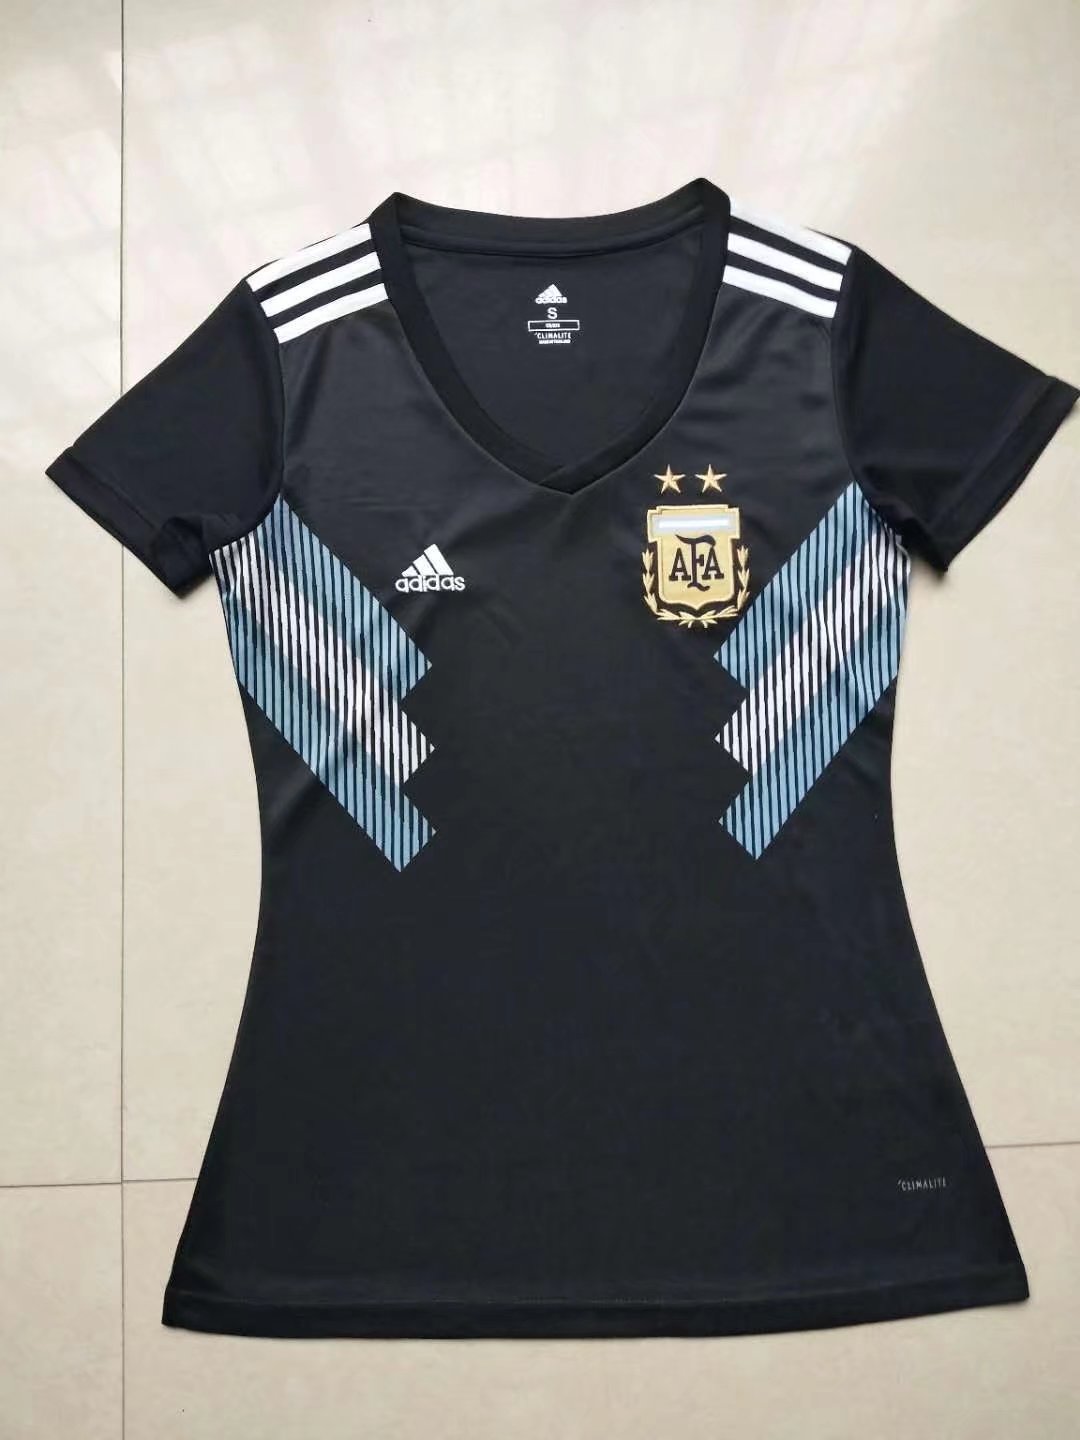 Espacio cibernético Representar Tropezón 2018 World Cup Argentina Away Black Women's Soccer Jersey Shirt - Cheap  Soccer Jerseys Shop | MINEJERSEYS.RU